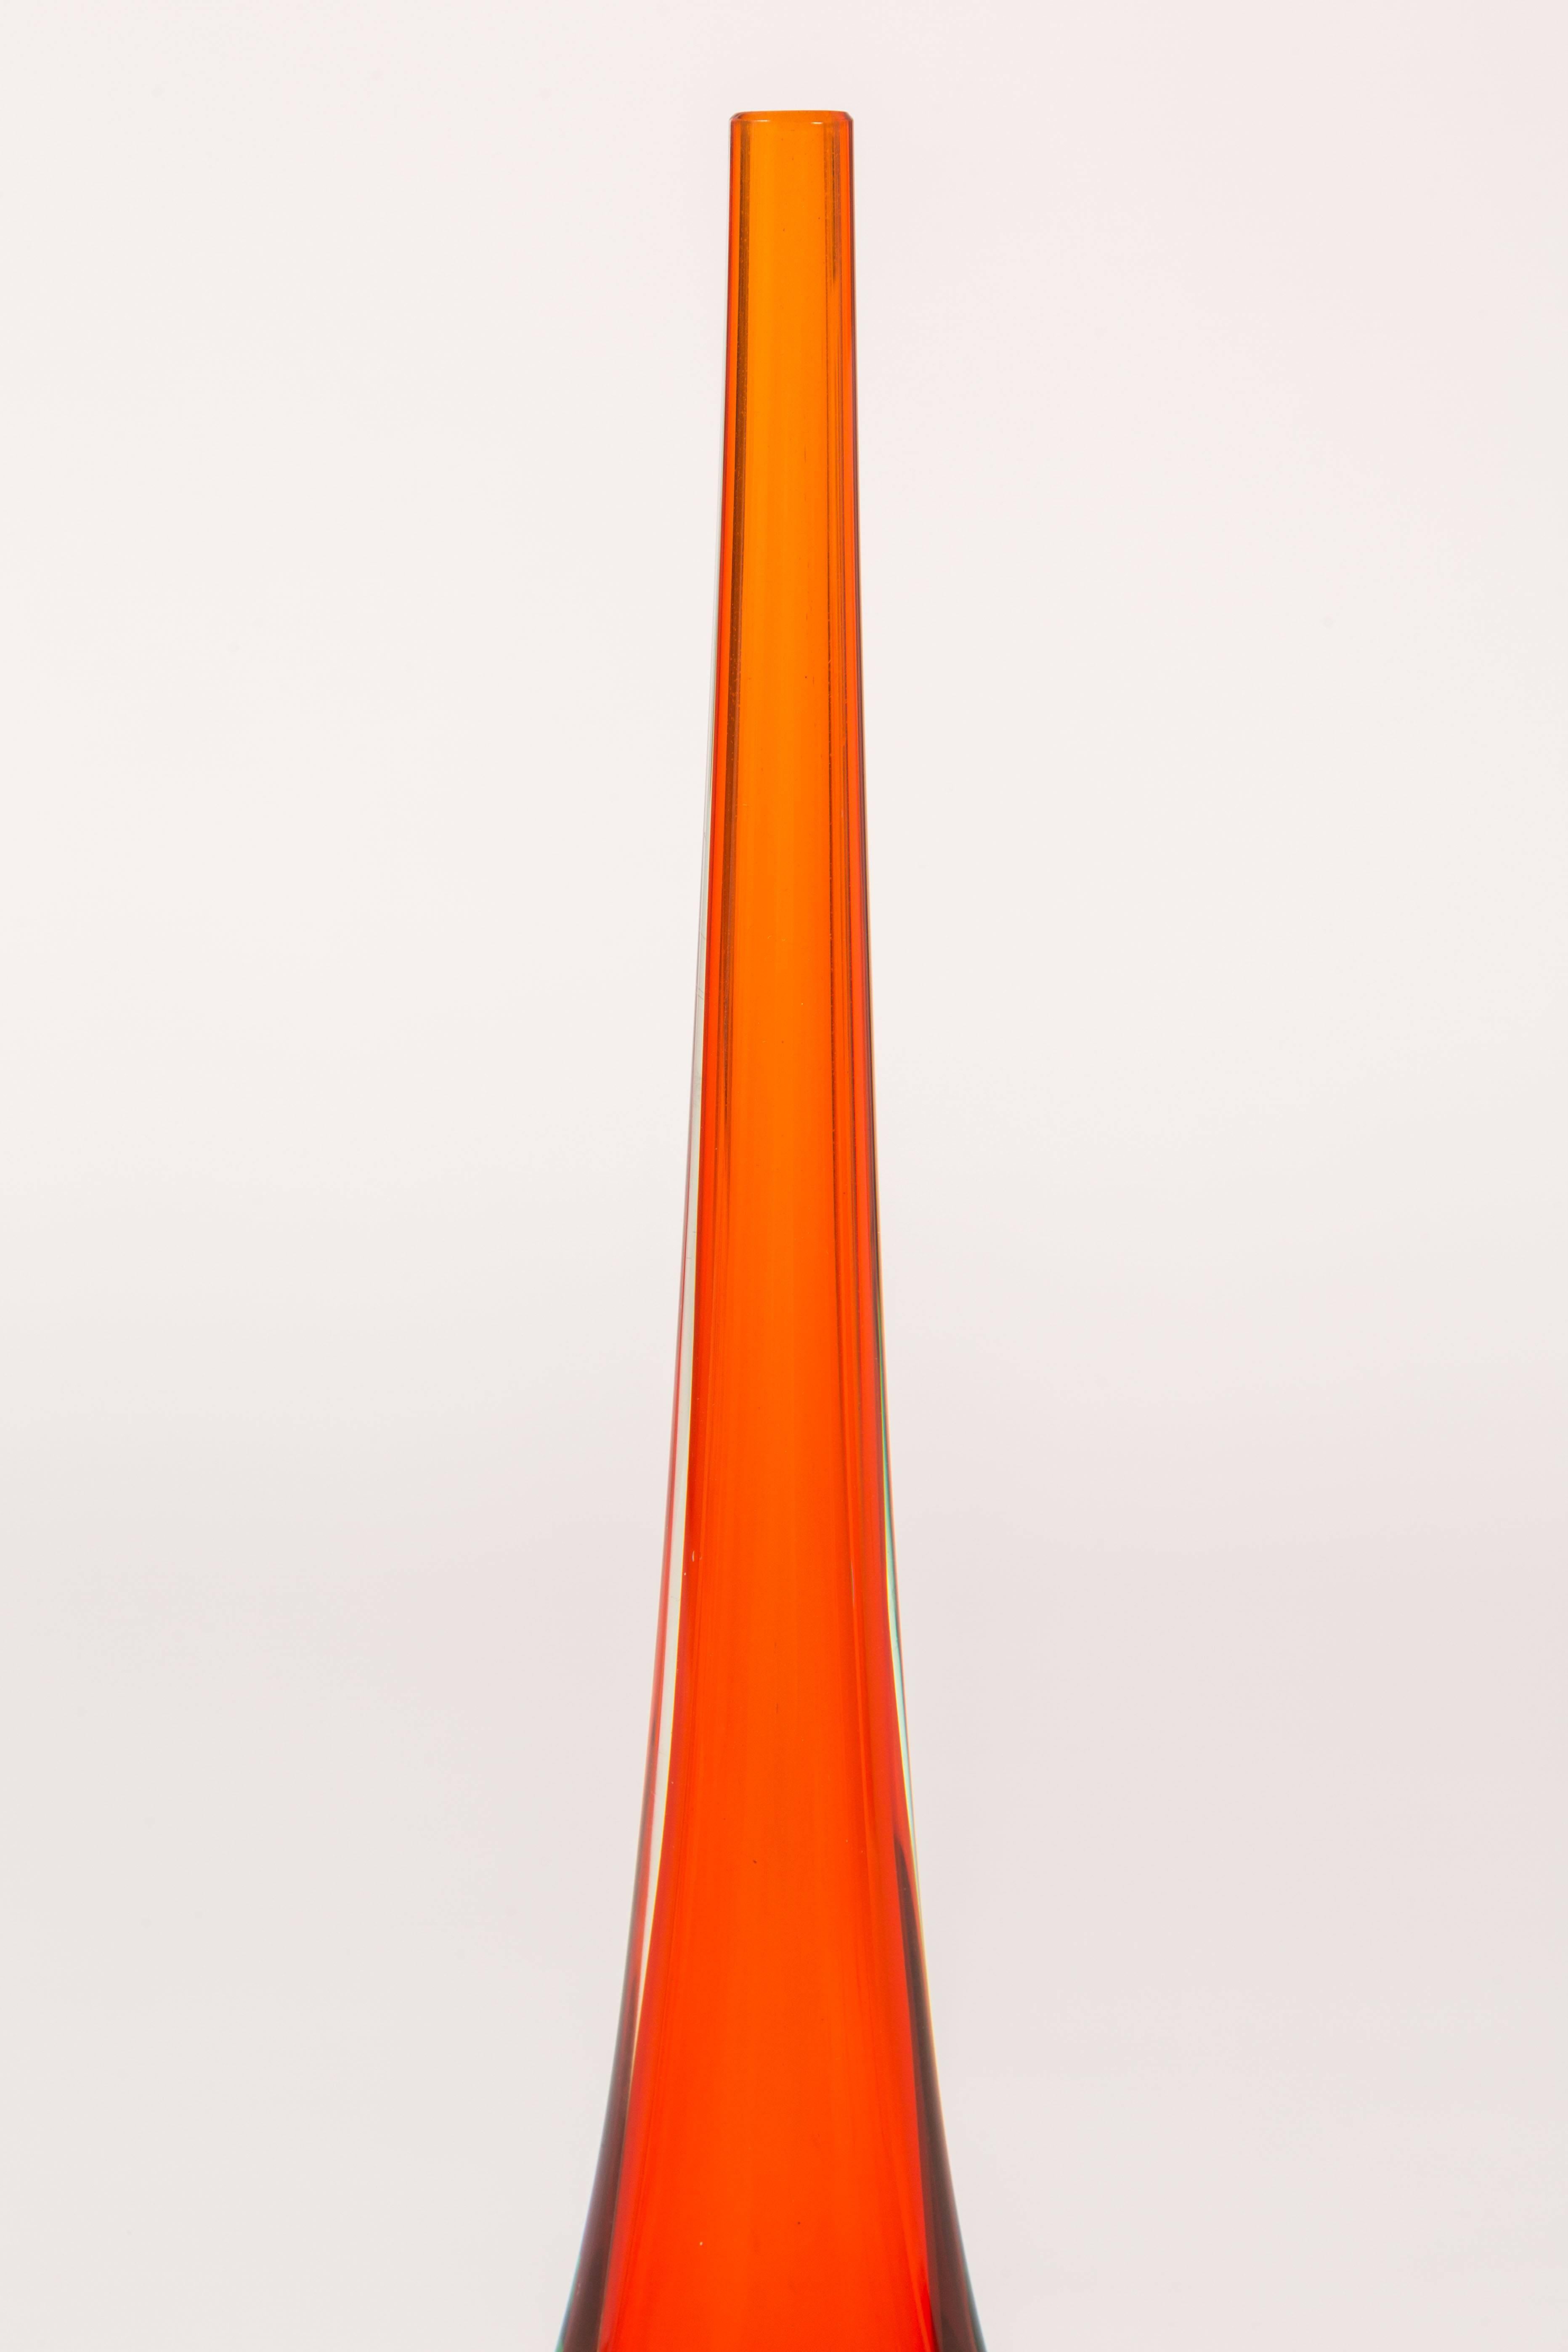 Tall Murano Glass Submerso Vessel In Good Condition In Palm Desert, CA